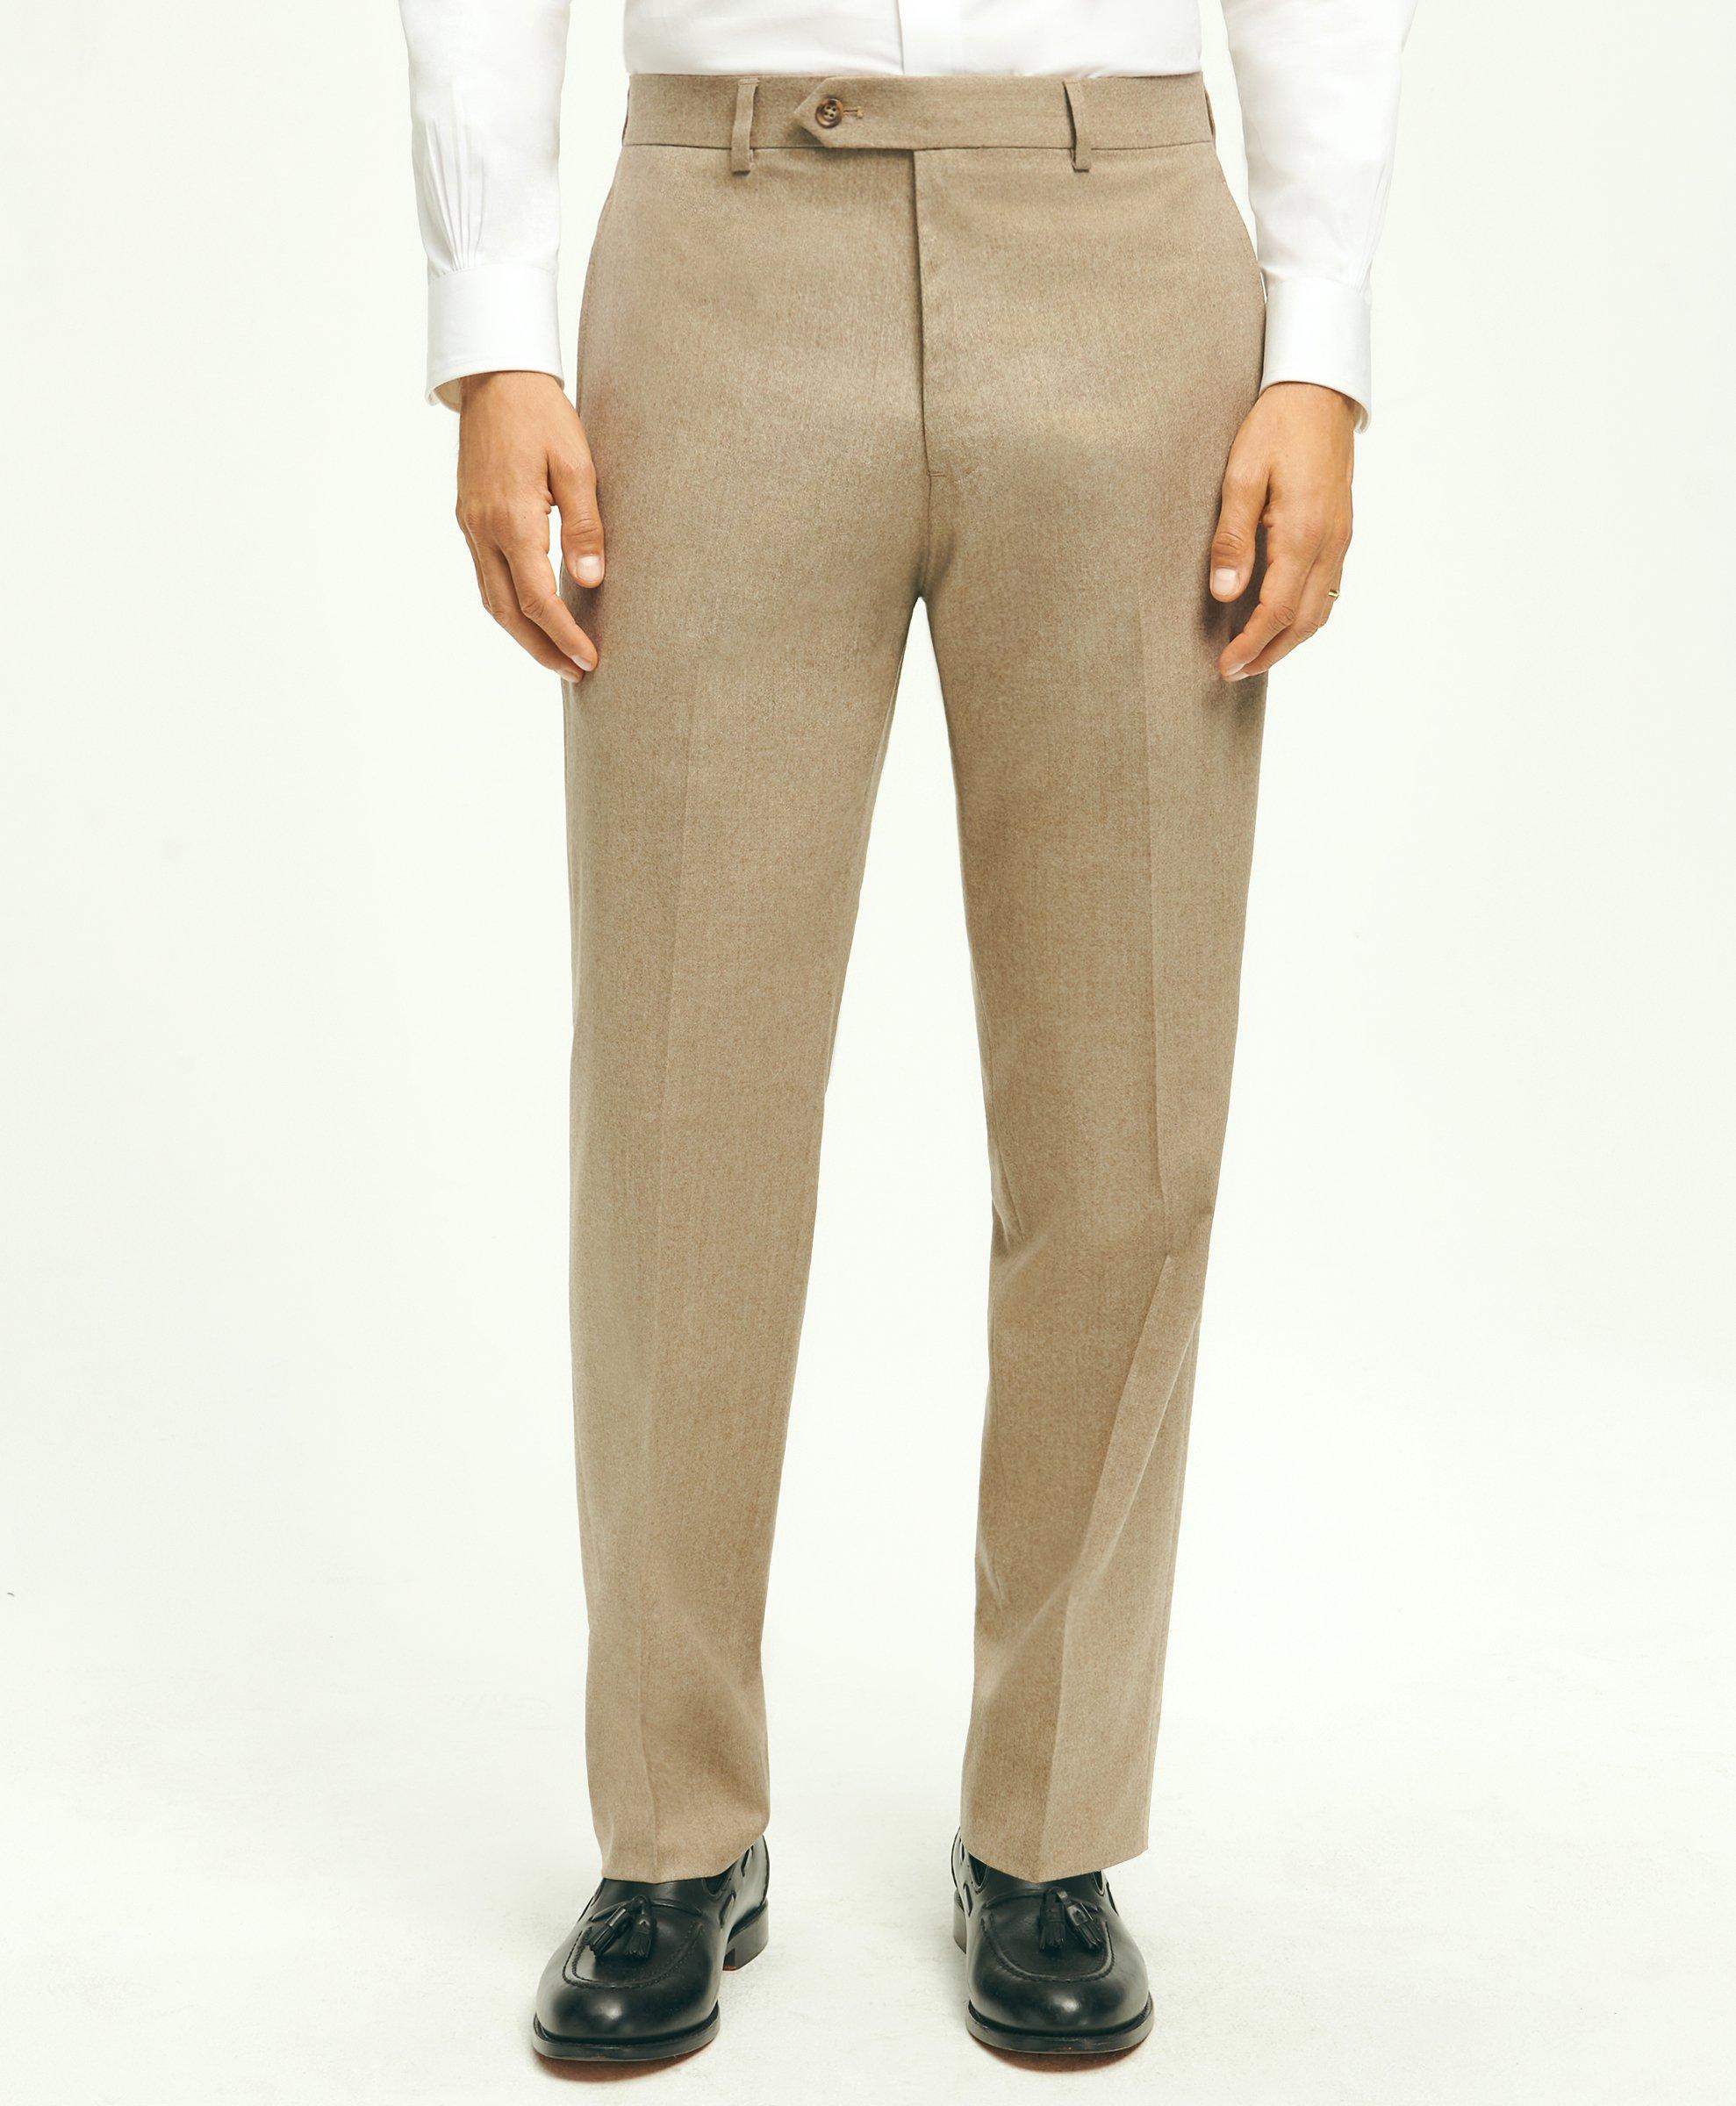 JBROS] Slack Pants (Short) Casual/Office M-XXL Size Women/Men